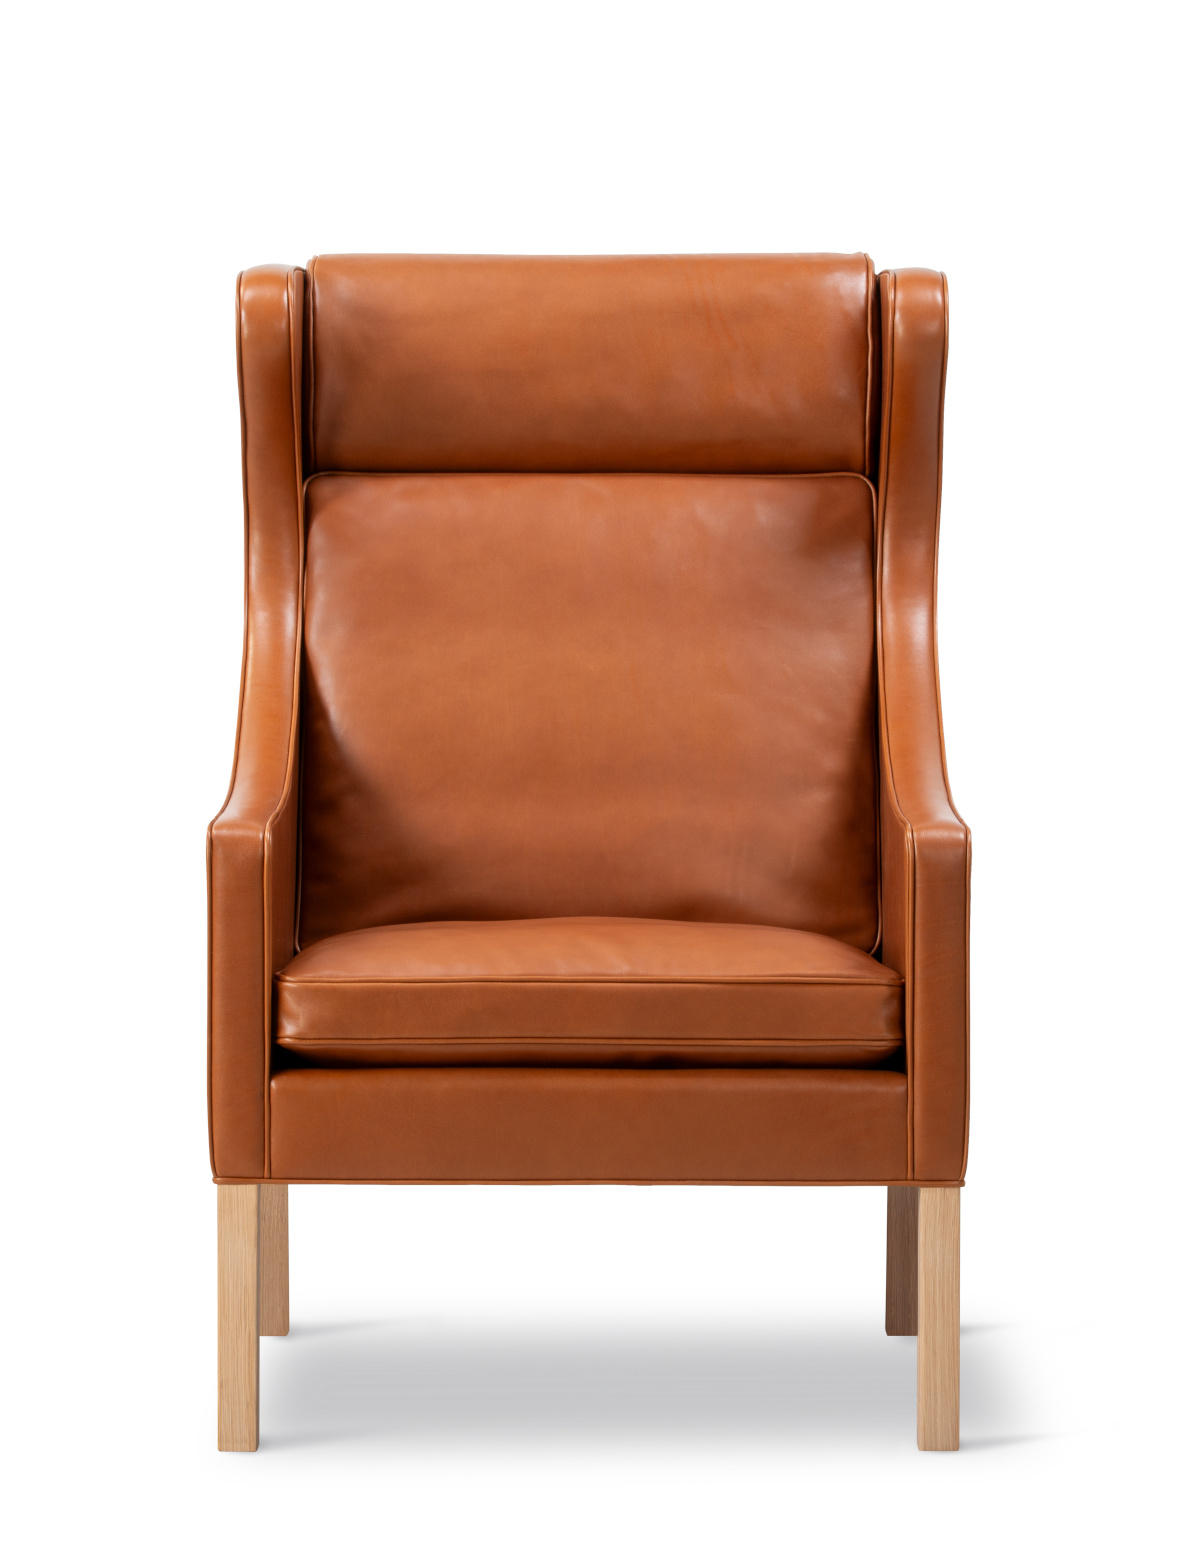 Mogensen 2204 Wing Chair, eiche hell geölt / leder cera 905 russet brown